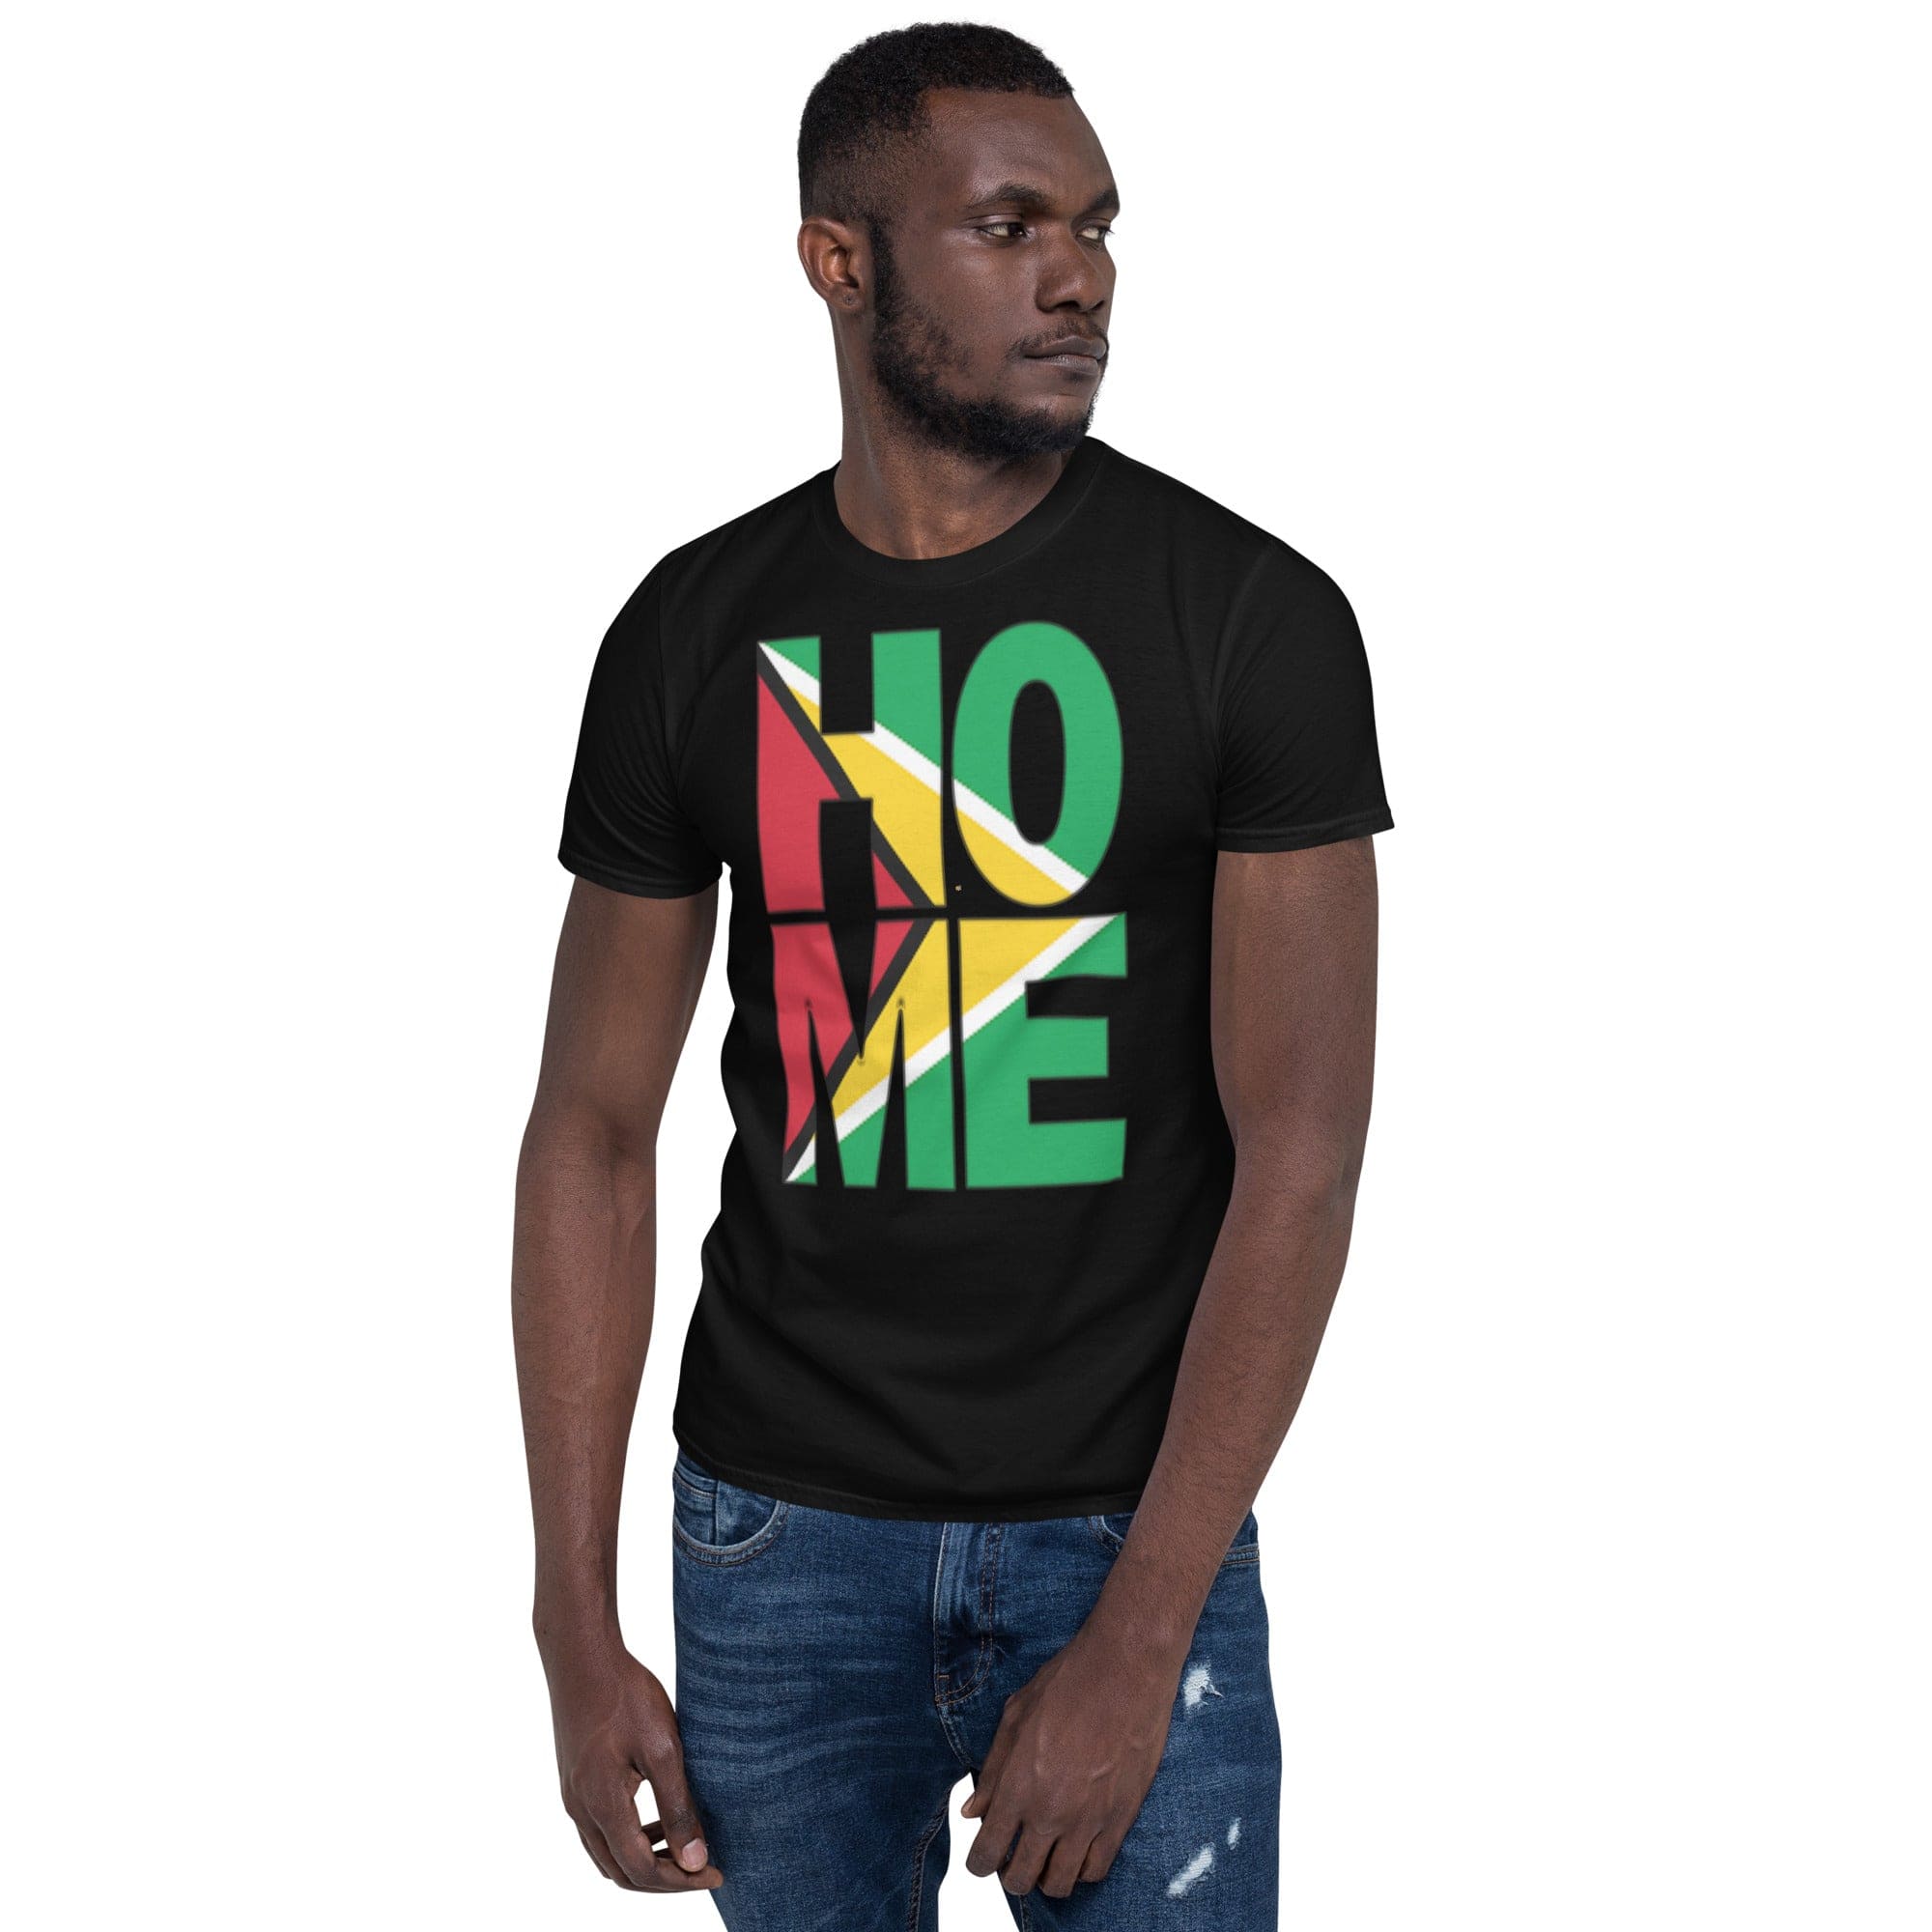 Guyana flag spelling HOME on black men wearing black color shirt